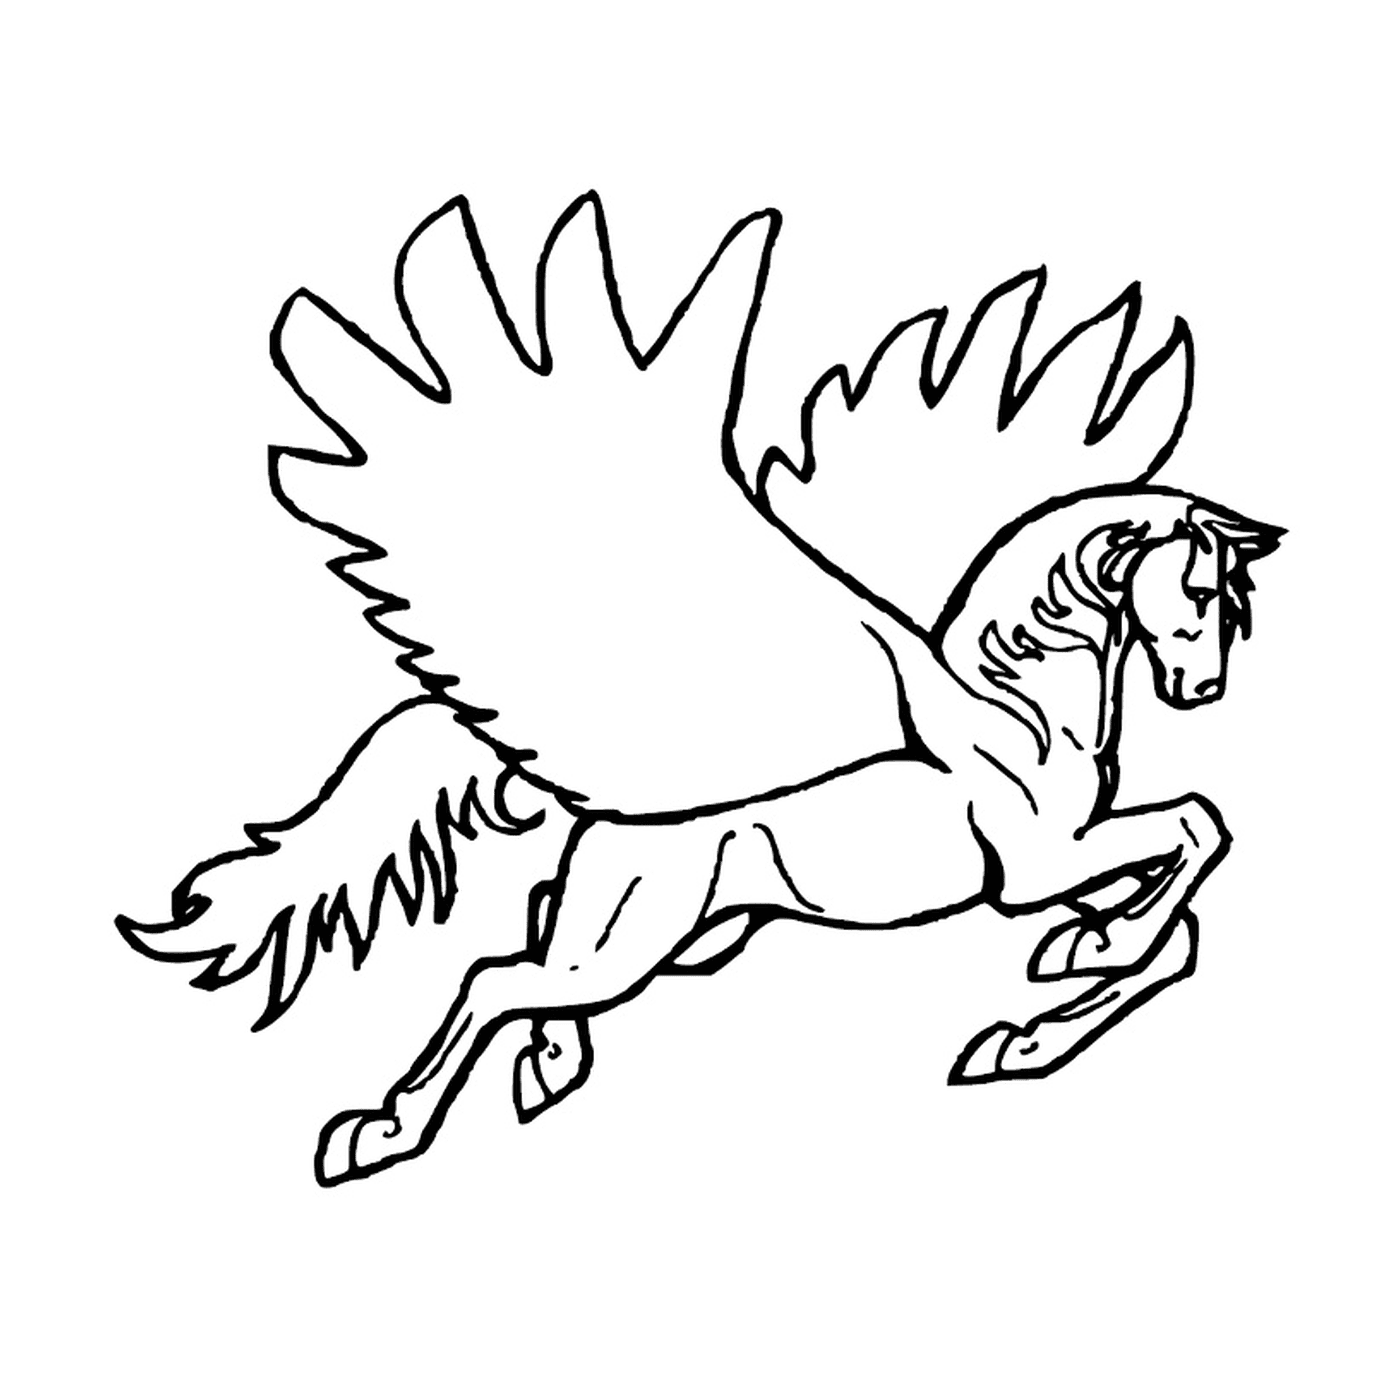  Pegasus-like winged horse 